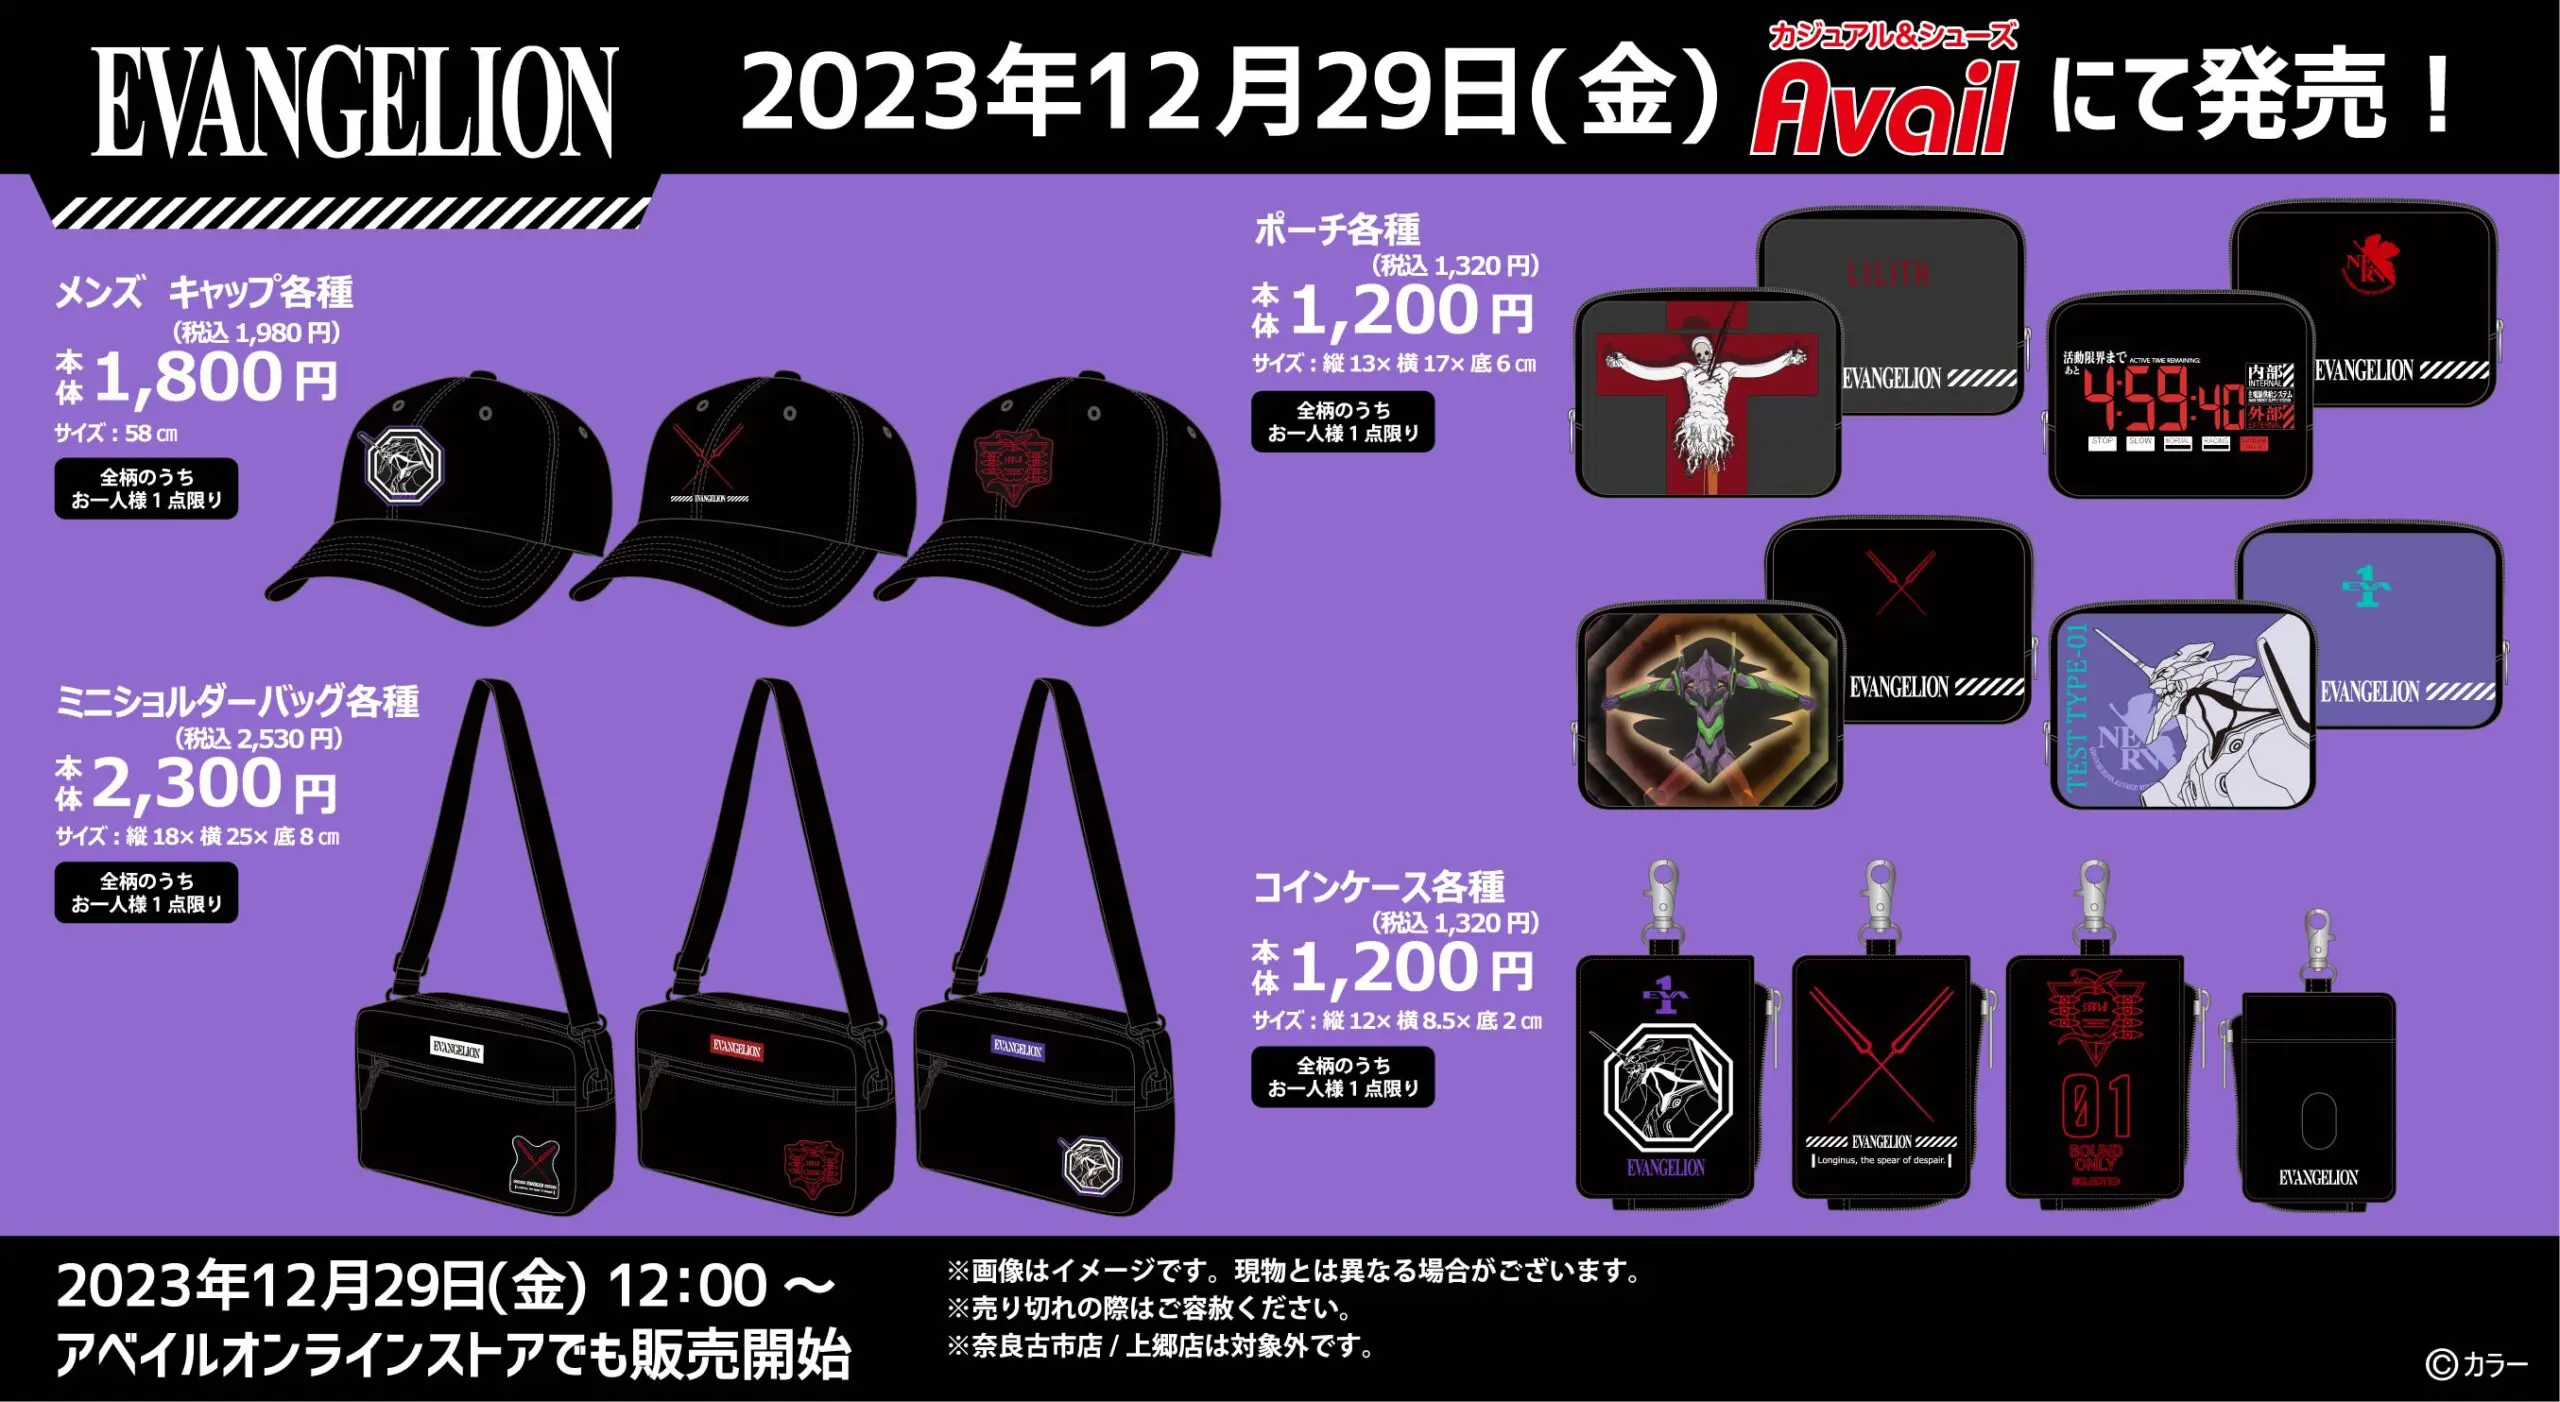 Evangelion Avail accessories 1 - caps, shoulder bags, pouches, coin cases